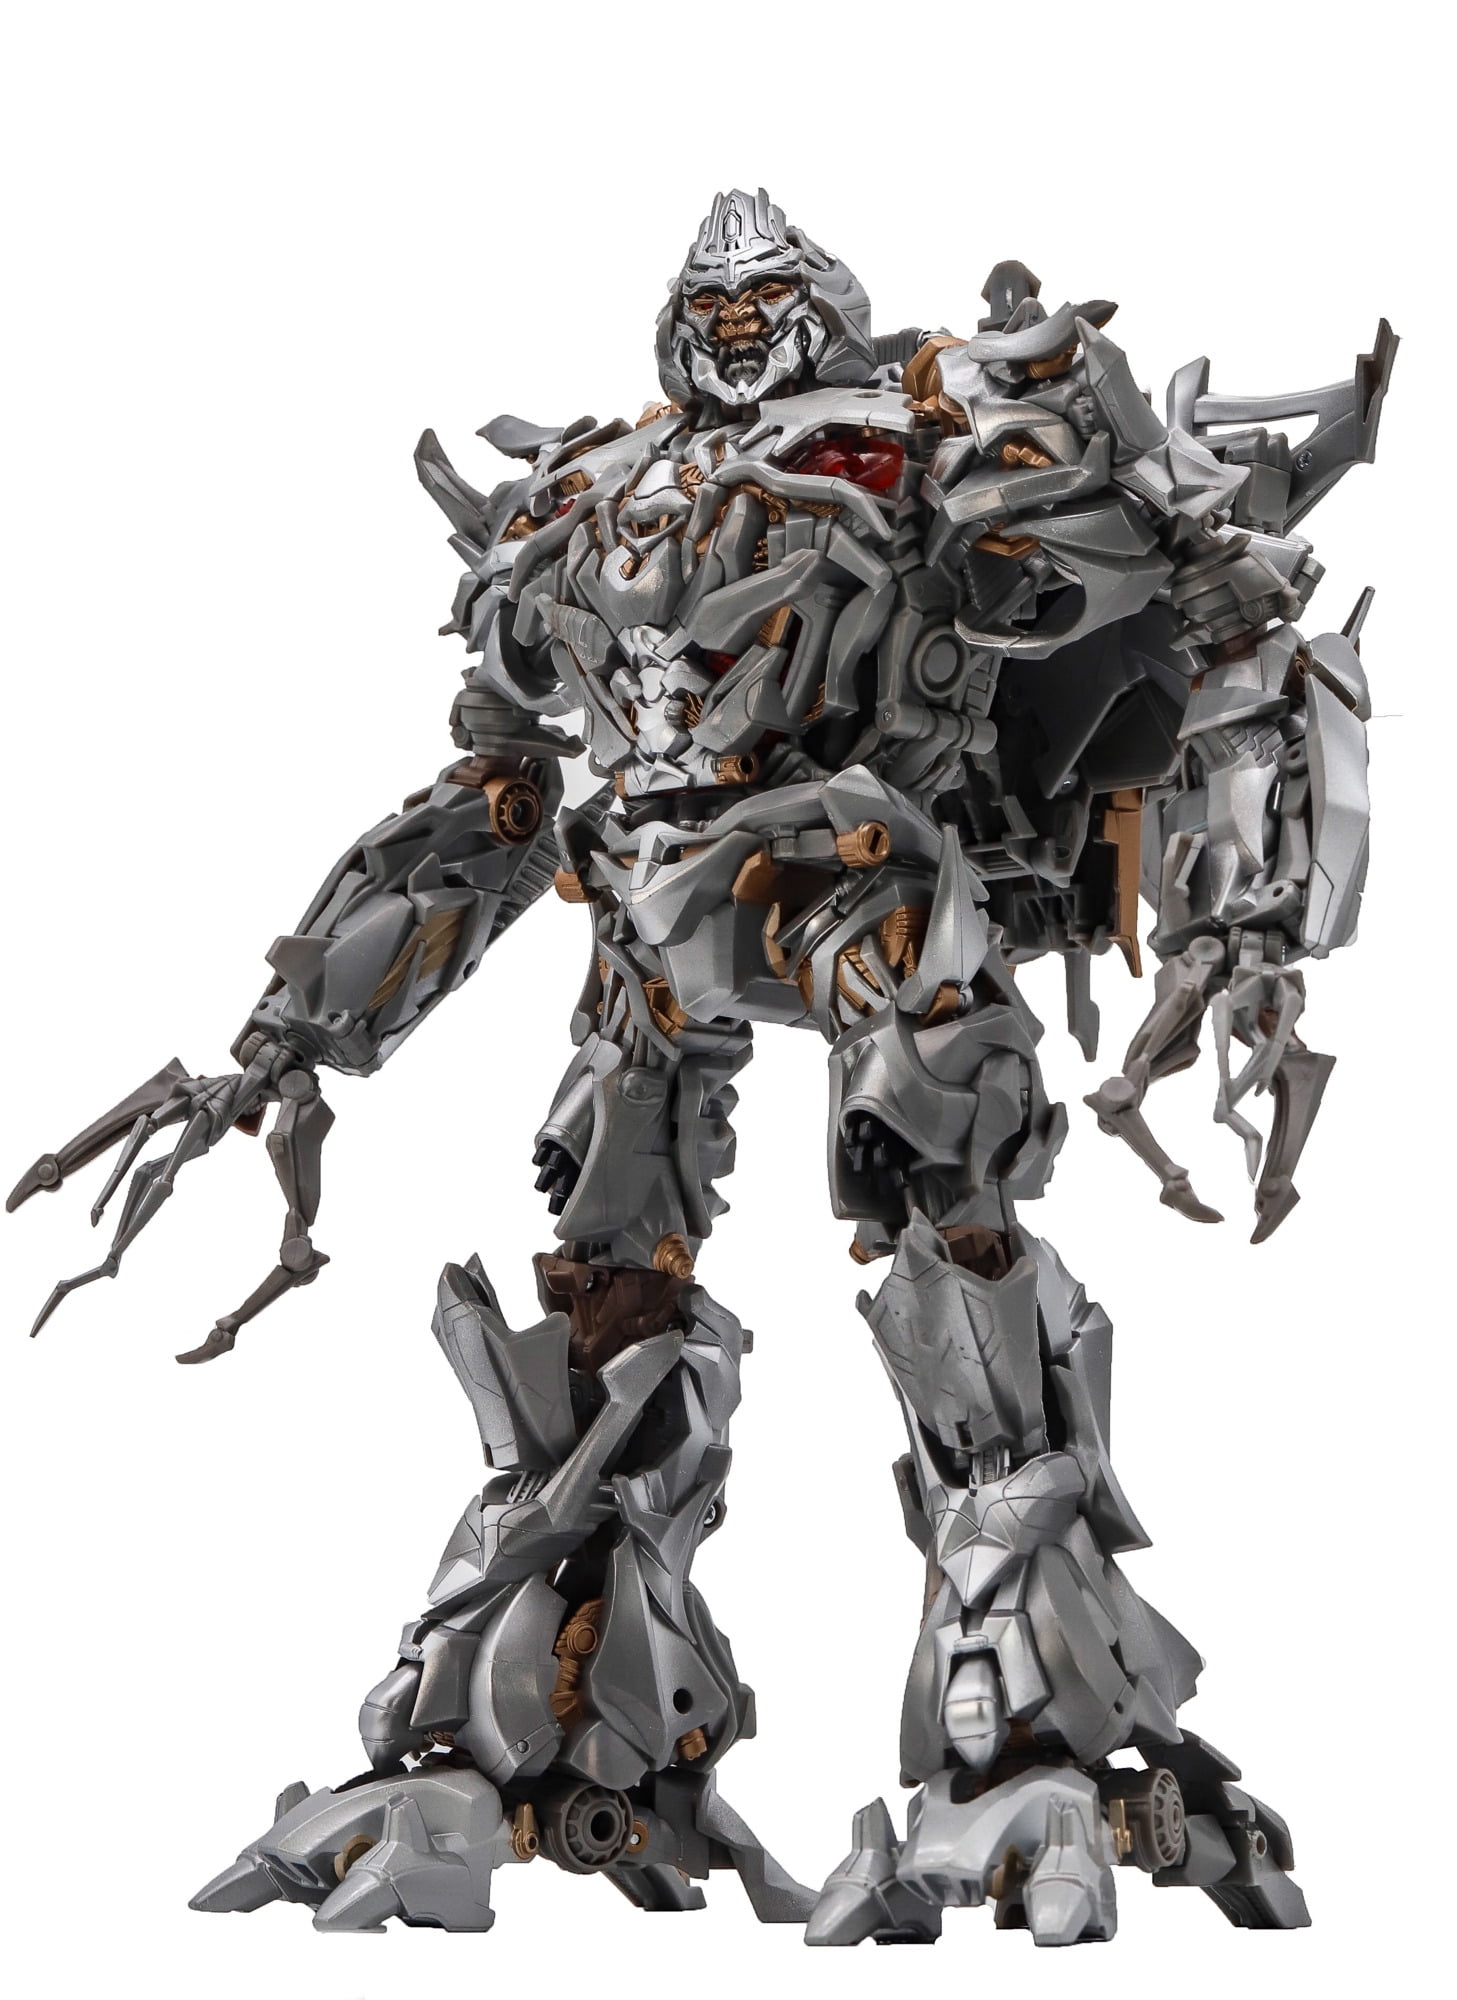 Hasbro Transformers Movie Leader Class Premium Megatron Action Figure for sale online 